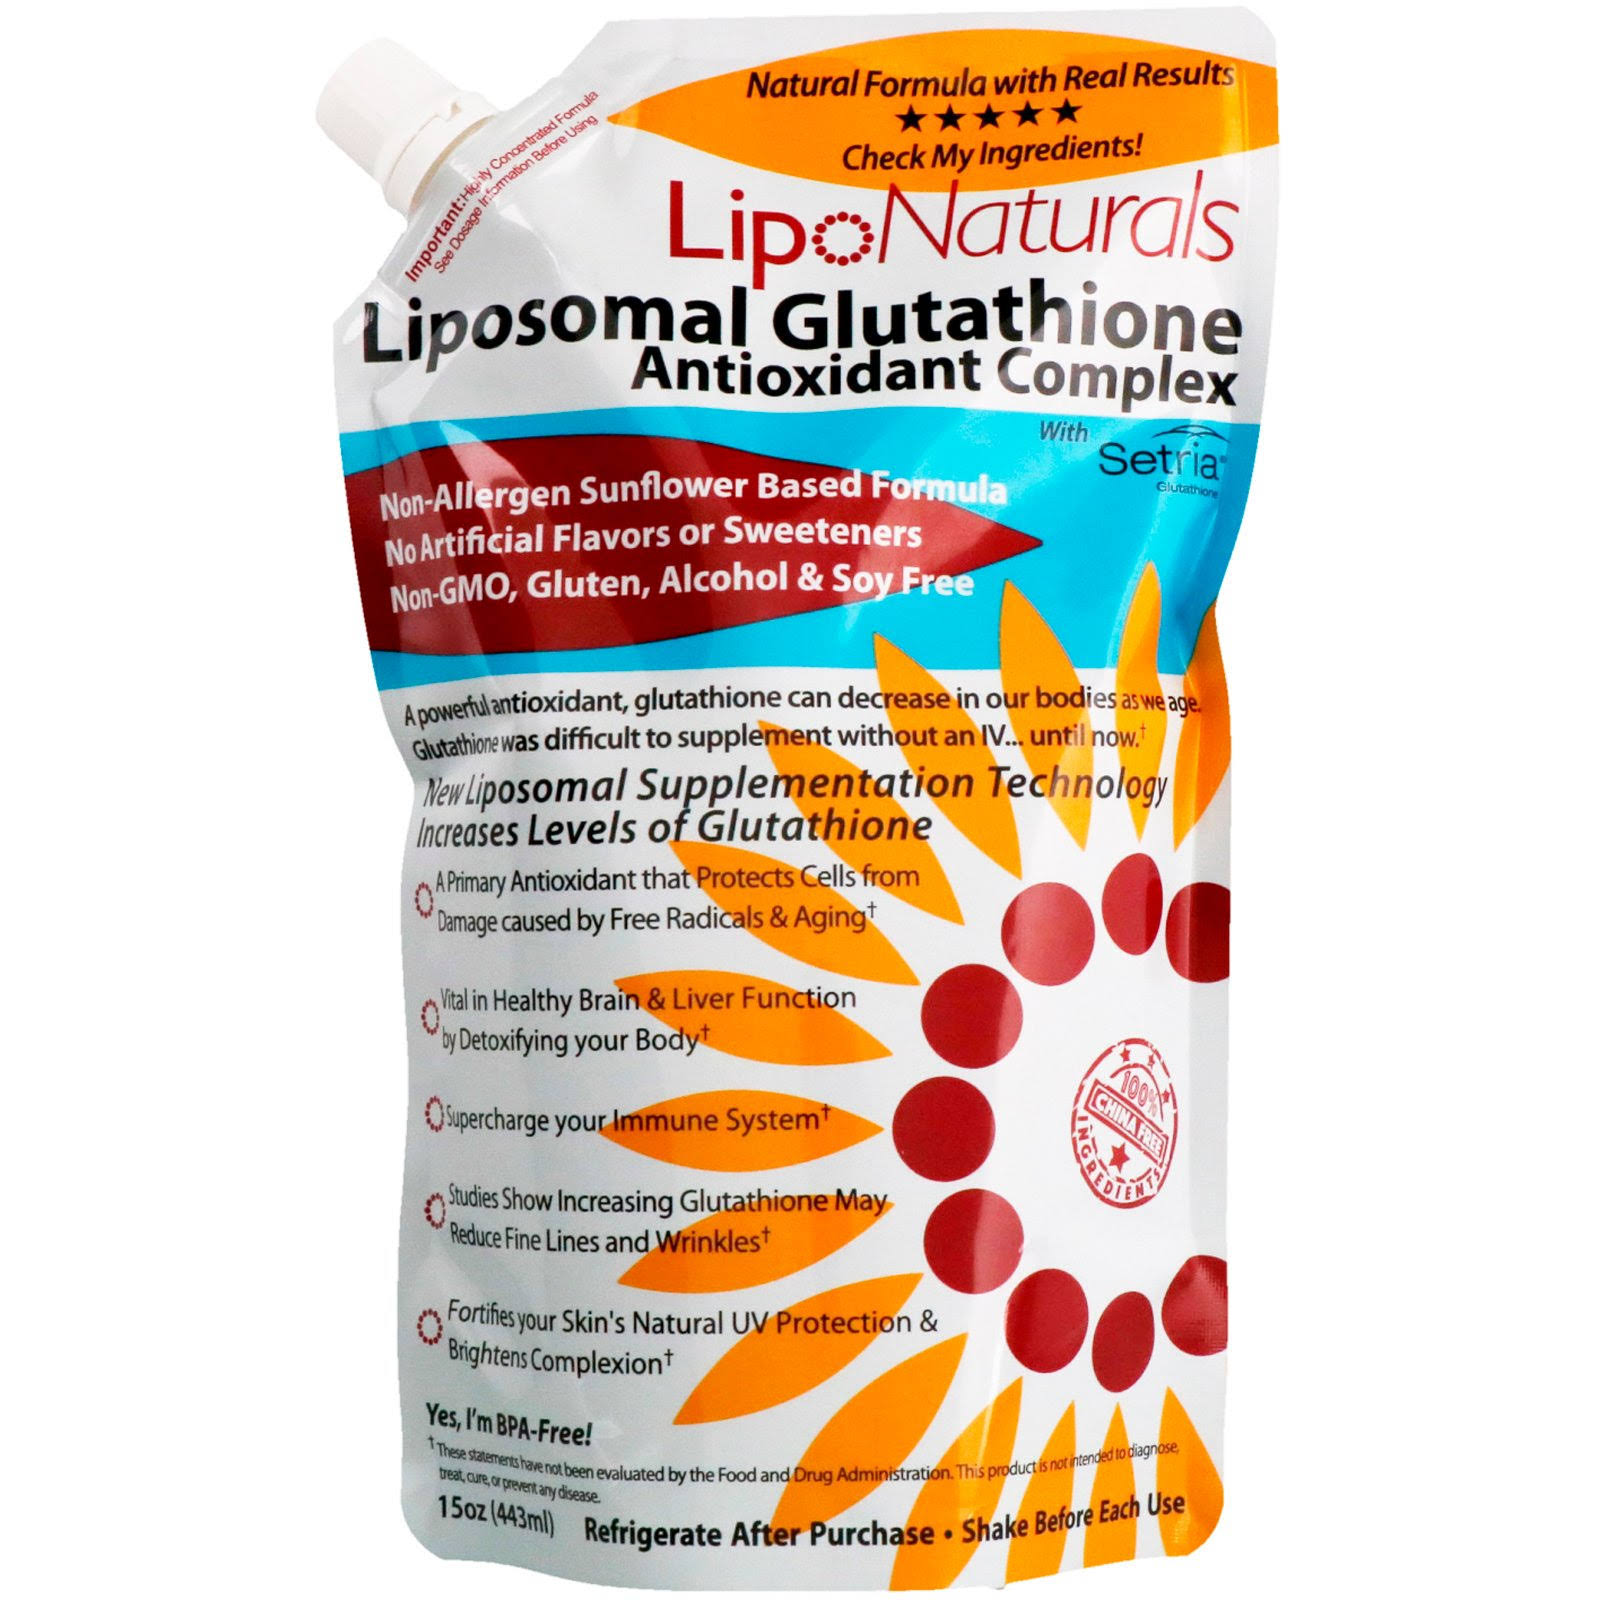 Lipo Naturals Liposomal Glutathione Antioxidant Complex + Seria - 15oz